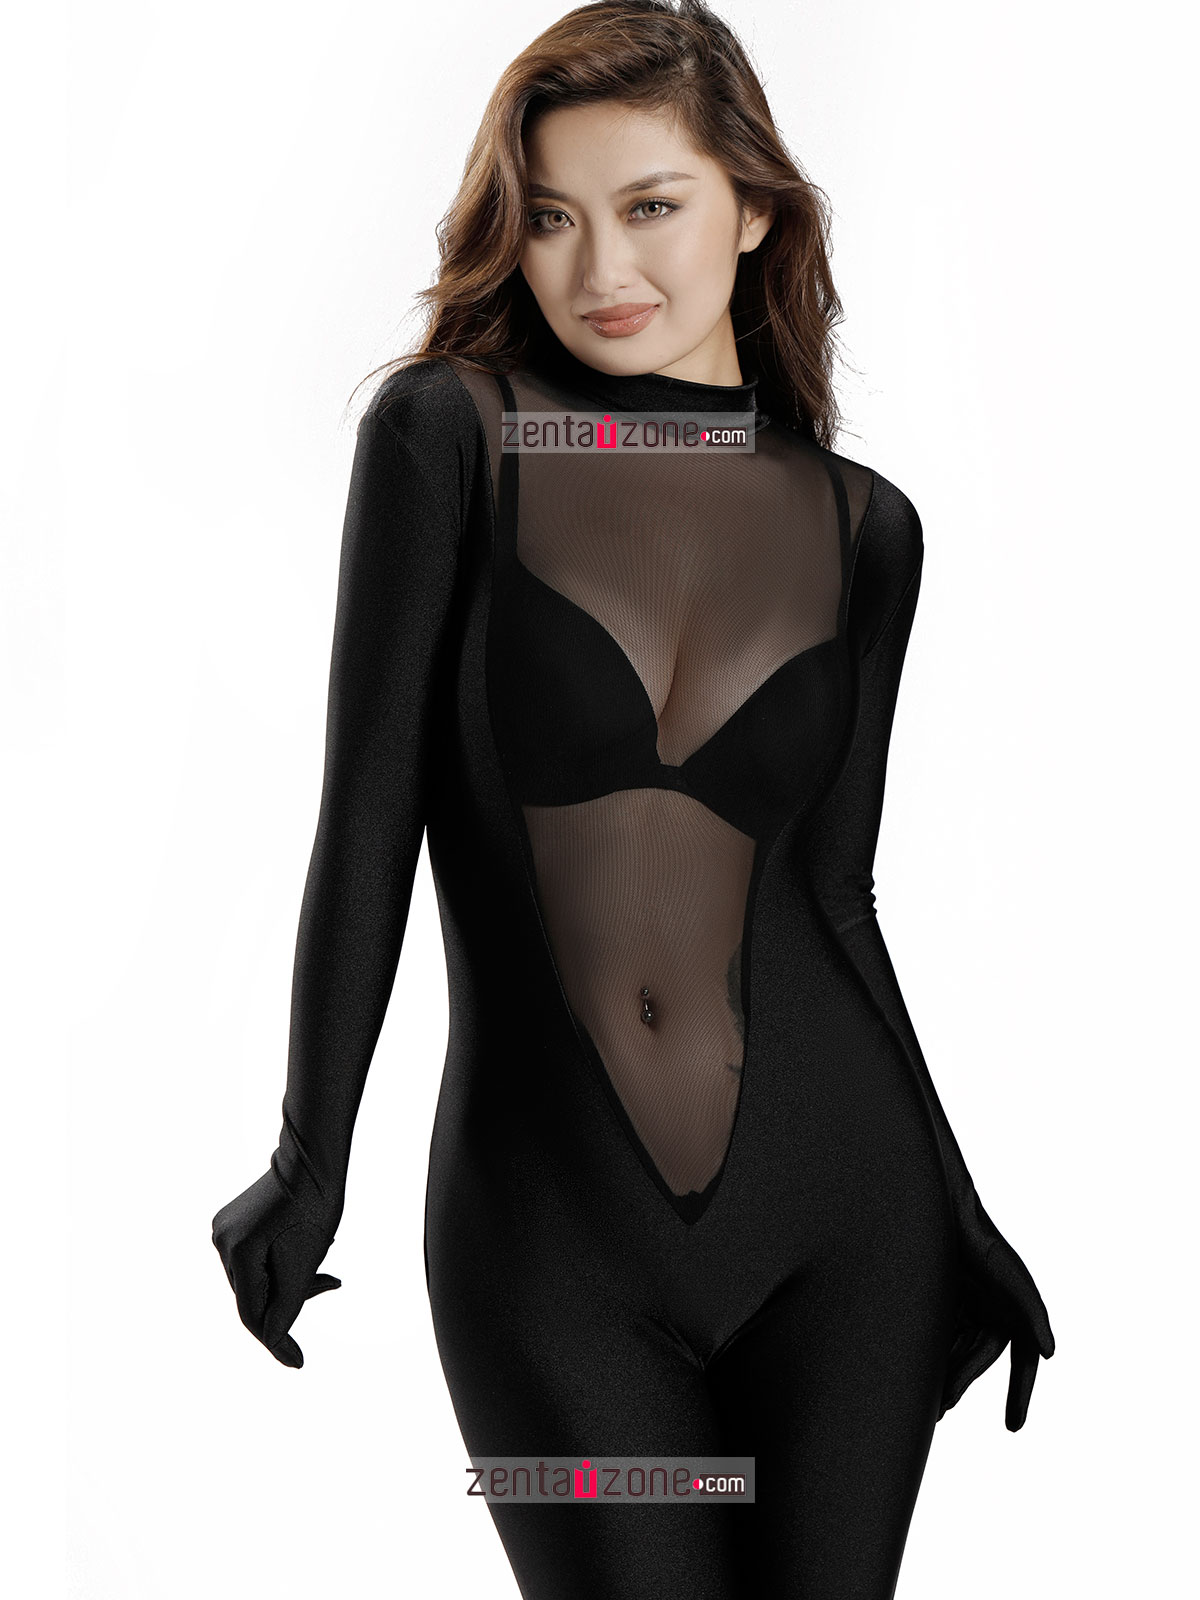 Nylon Sexy Transparent Lycra Zentai Full Bodysuit